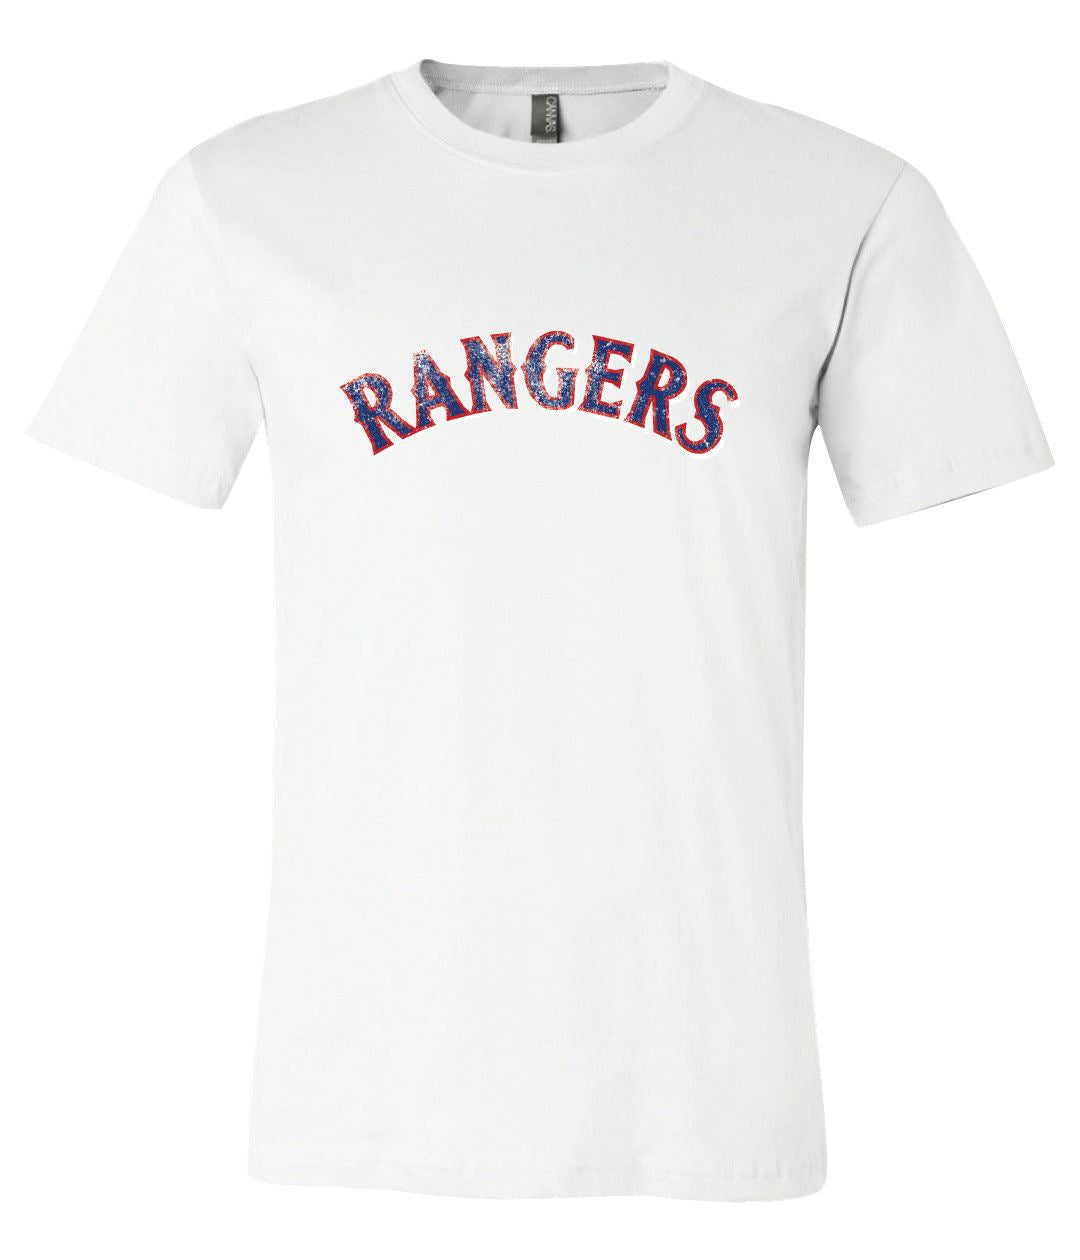 Vintage Texas Rangers Shirt, Texas EST 1835 Tee - Printing Ooze